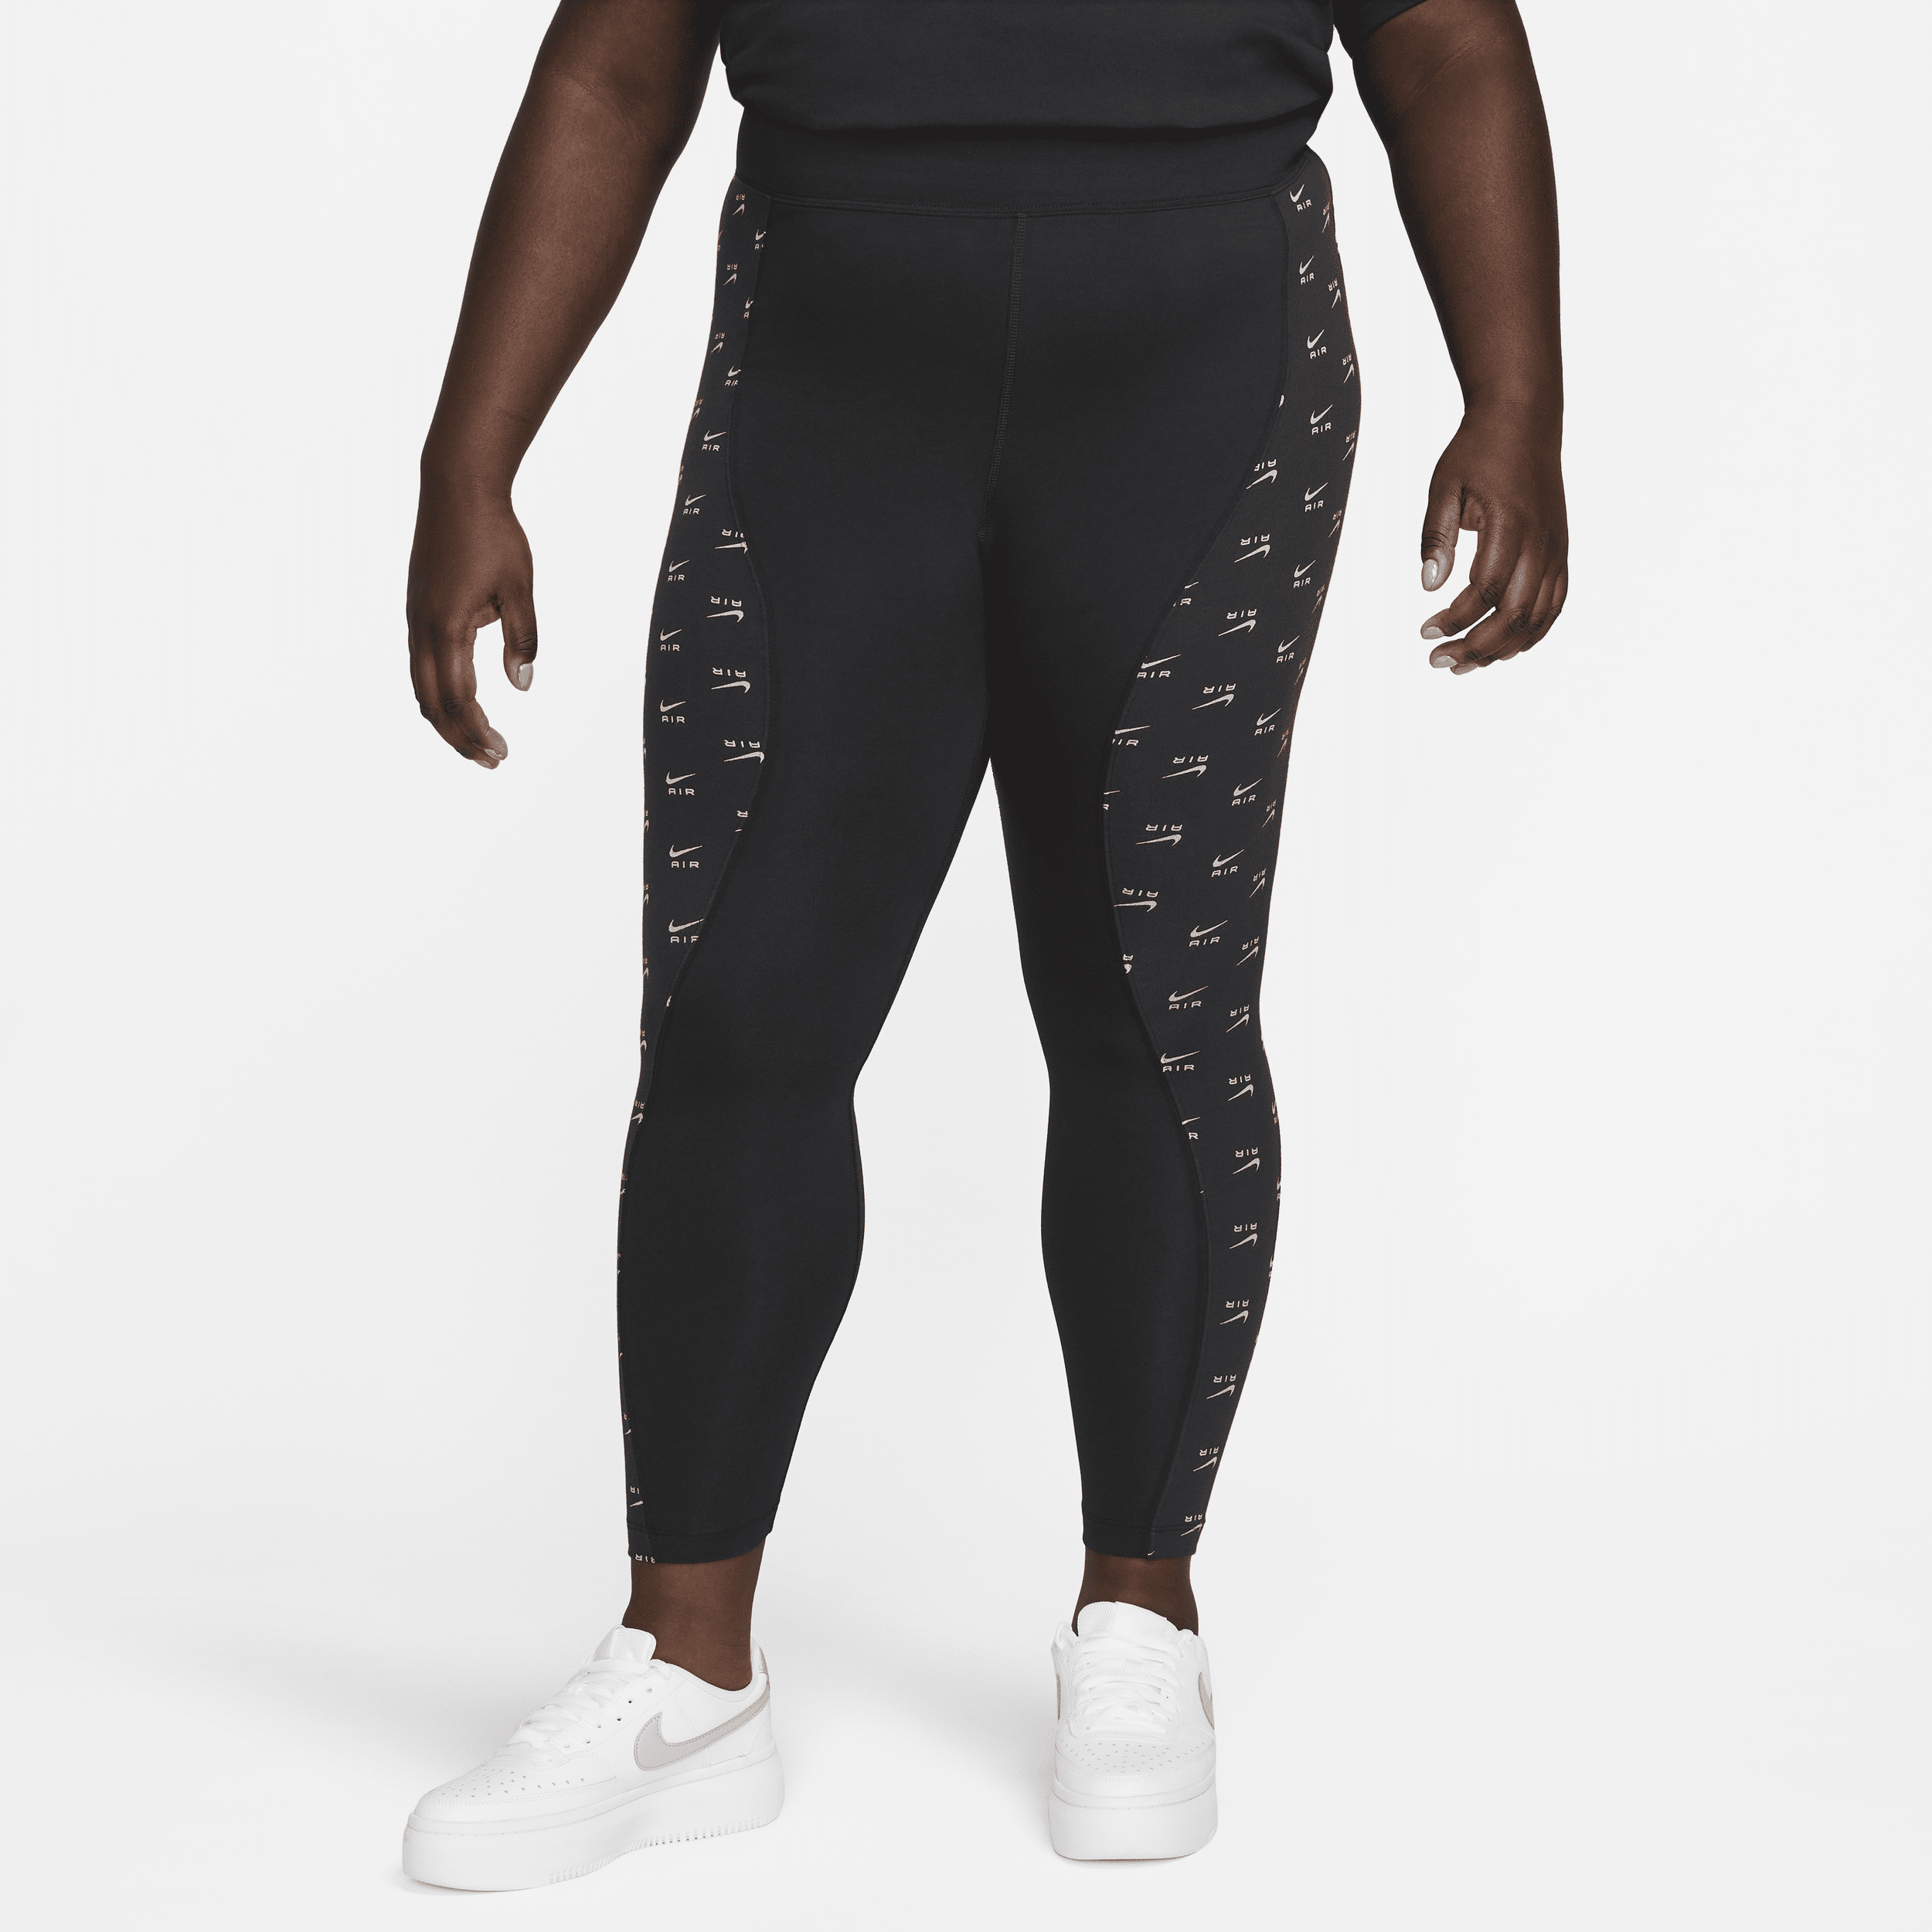 Nike Air Leggings de talle alto y longitud completa - Mujer - Negro